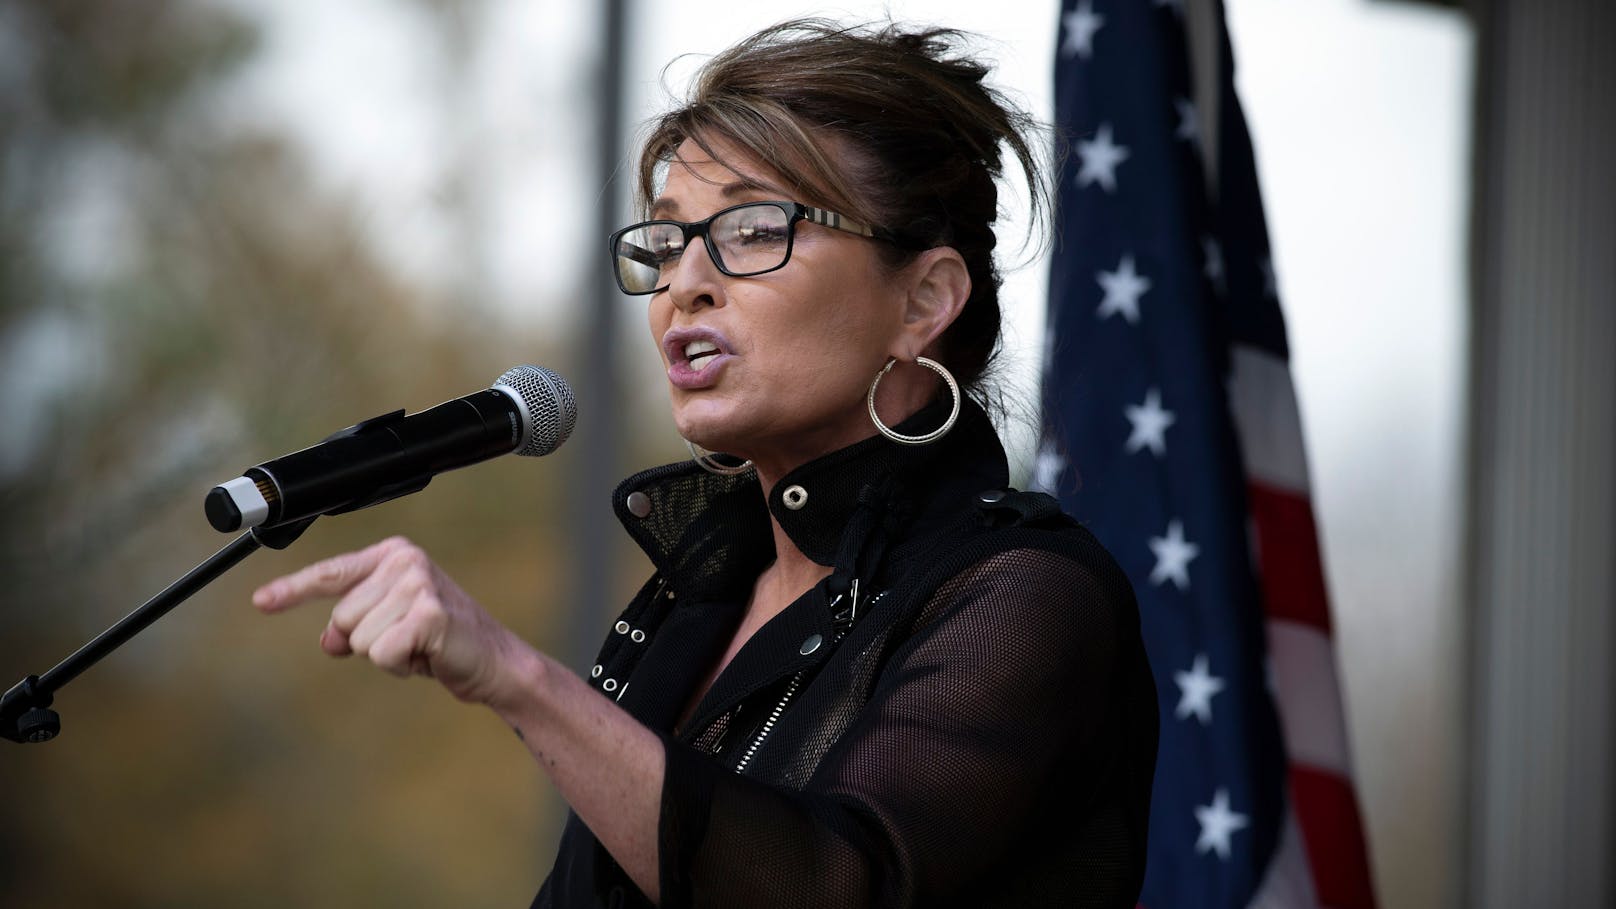 Die US-Politikerin Sarah Palin hat gegen Corona-Vorschriften verstoßen.